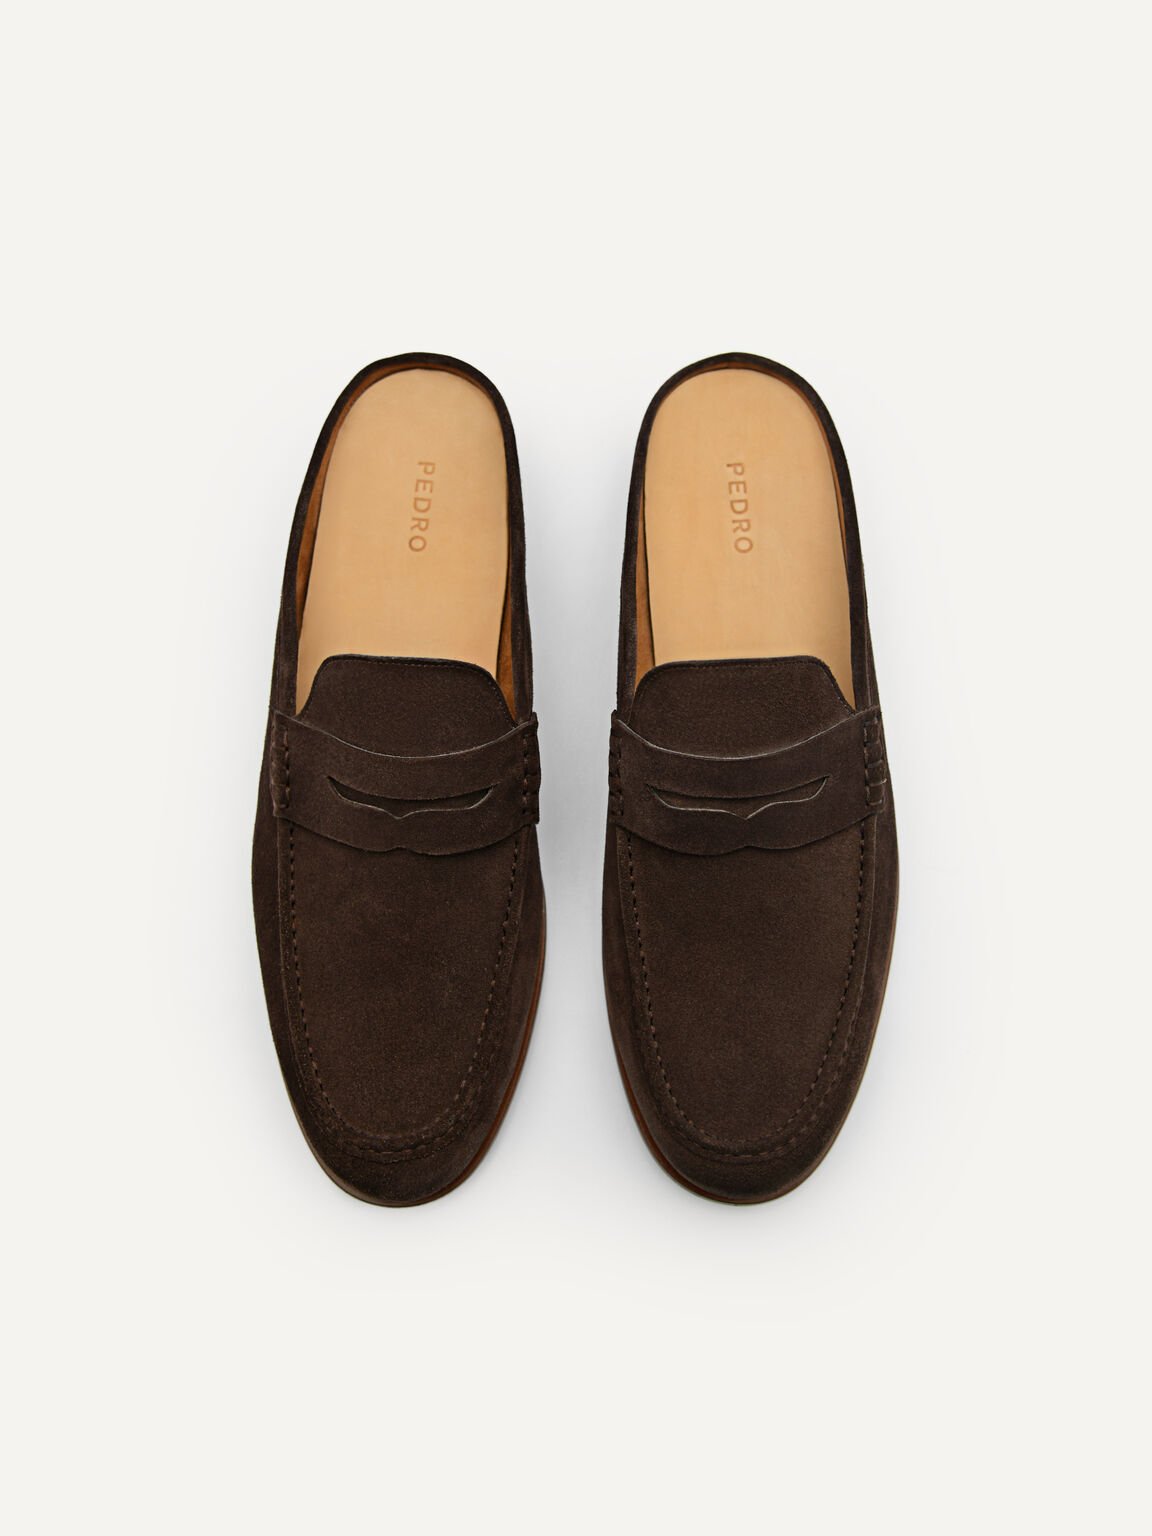 Blake Leather Slip-On Loafers, Dark Brown